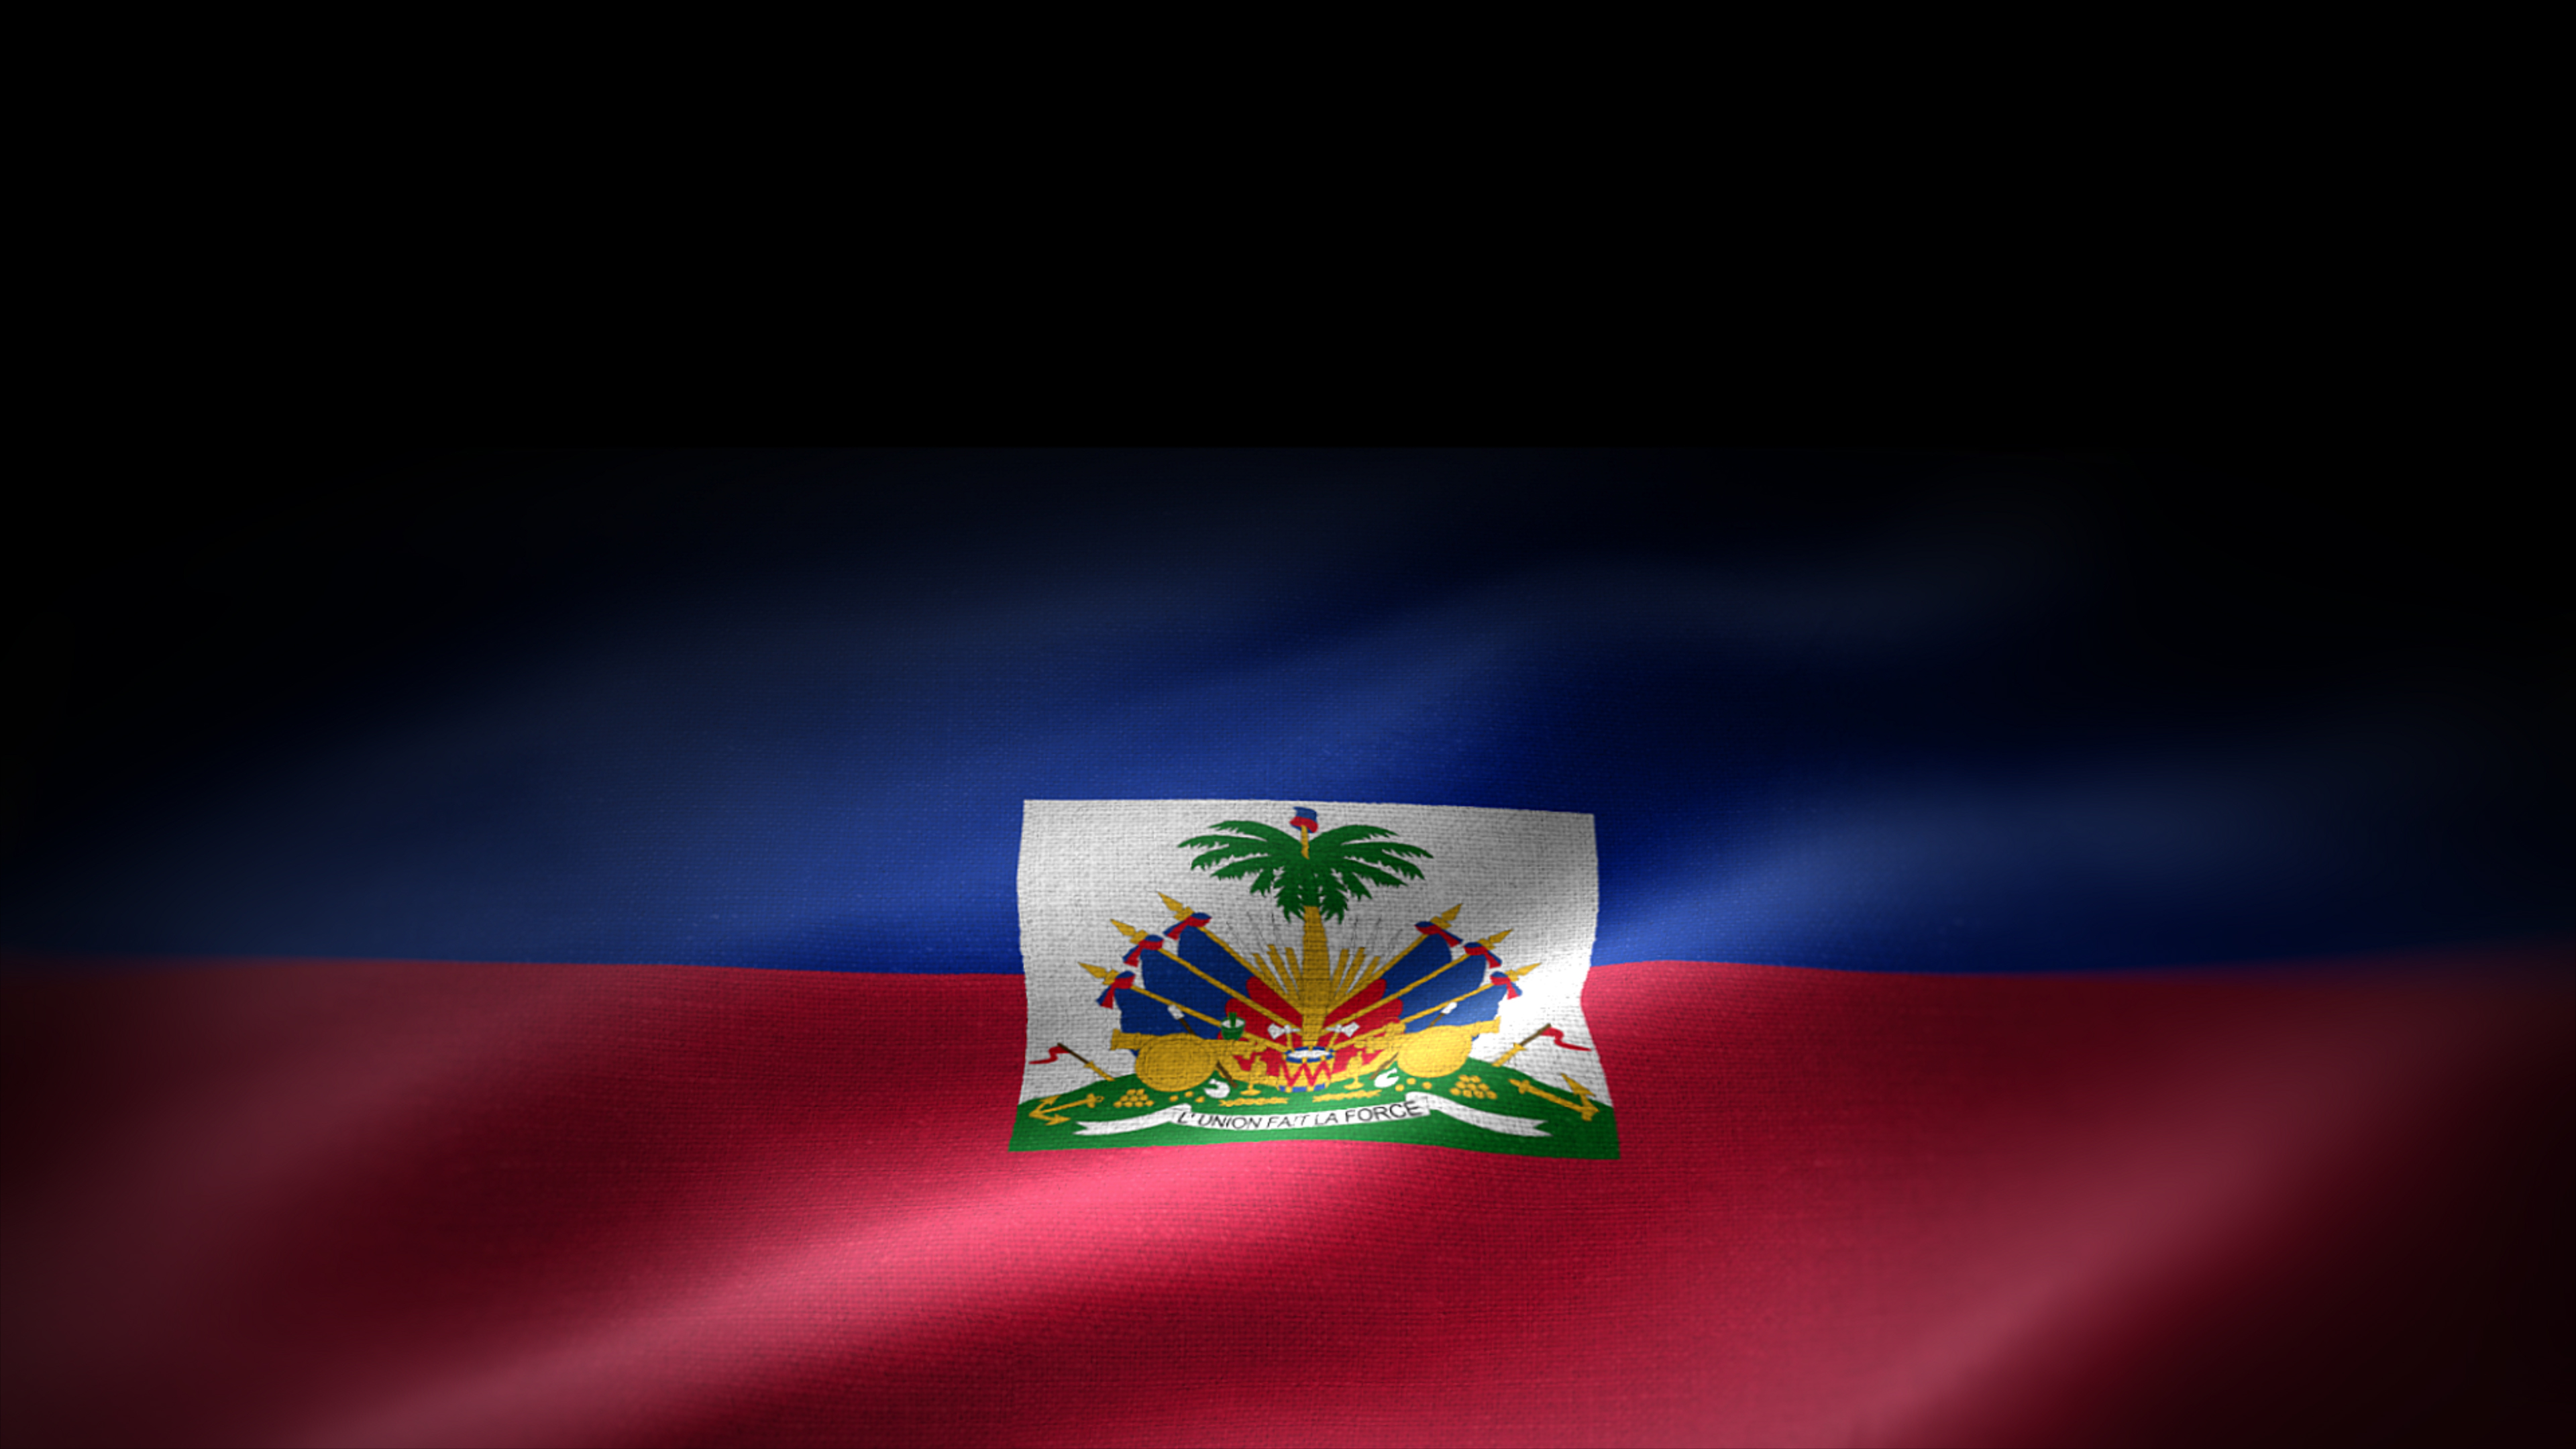     L'ONU demande aux Etats de la région de cesser d'expulser les Haïtiens

